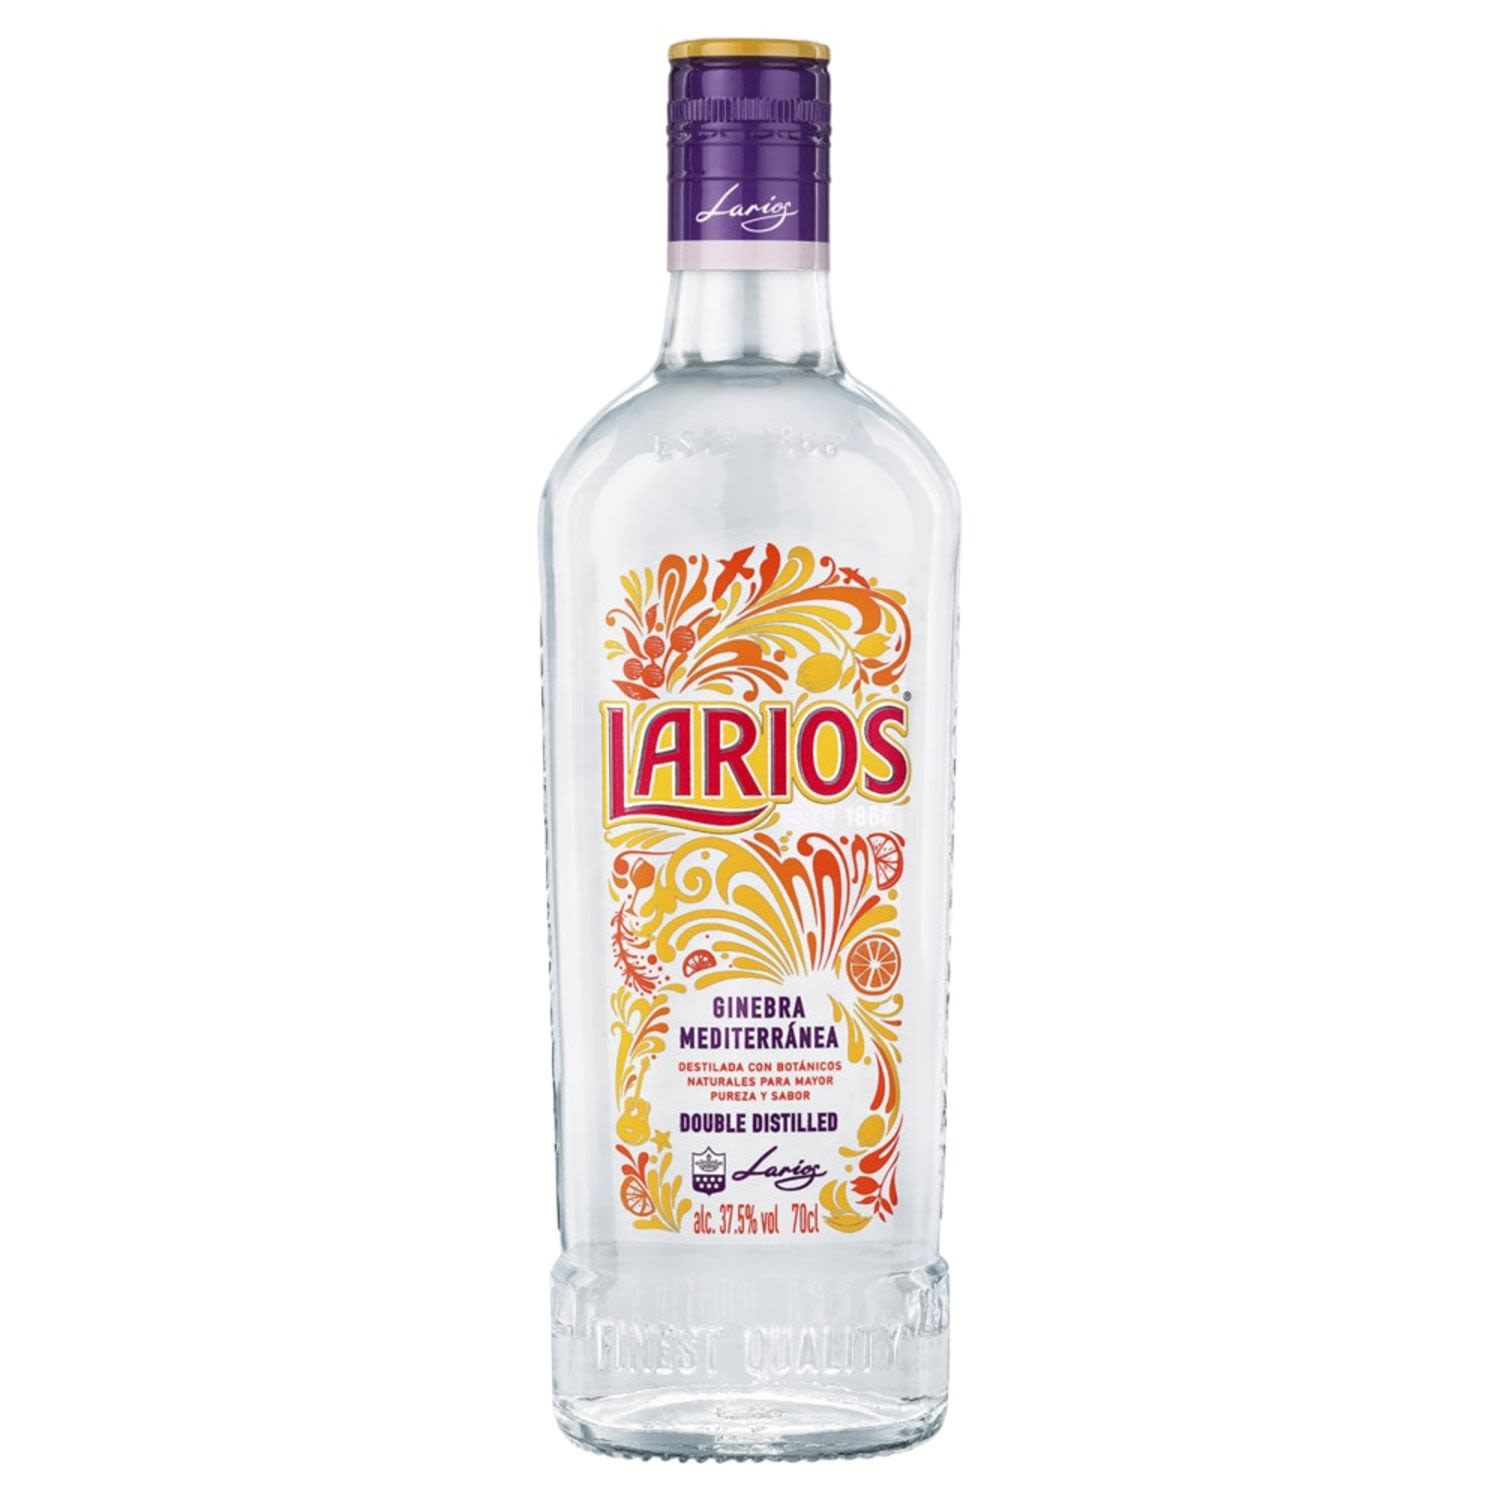 Larios Dry Gin 37.5% 700mL Bottle